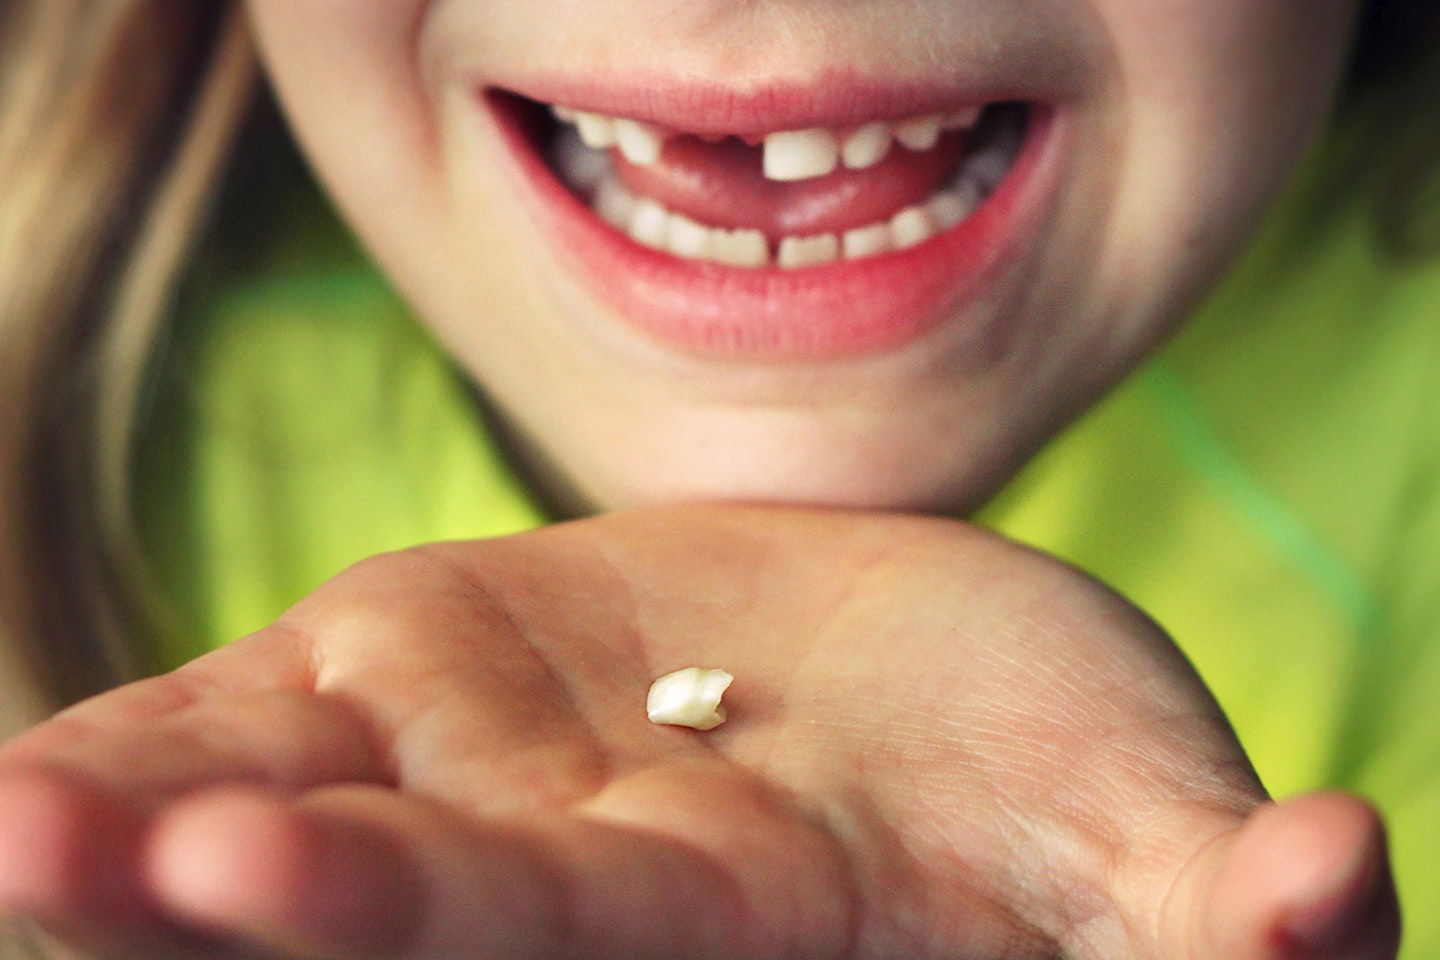 Dad tooth fairies pay more for teeth than mum tooth fairies